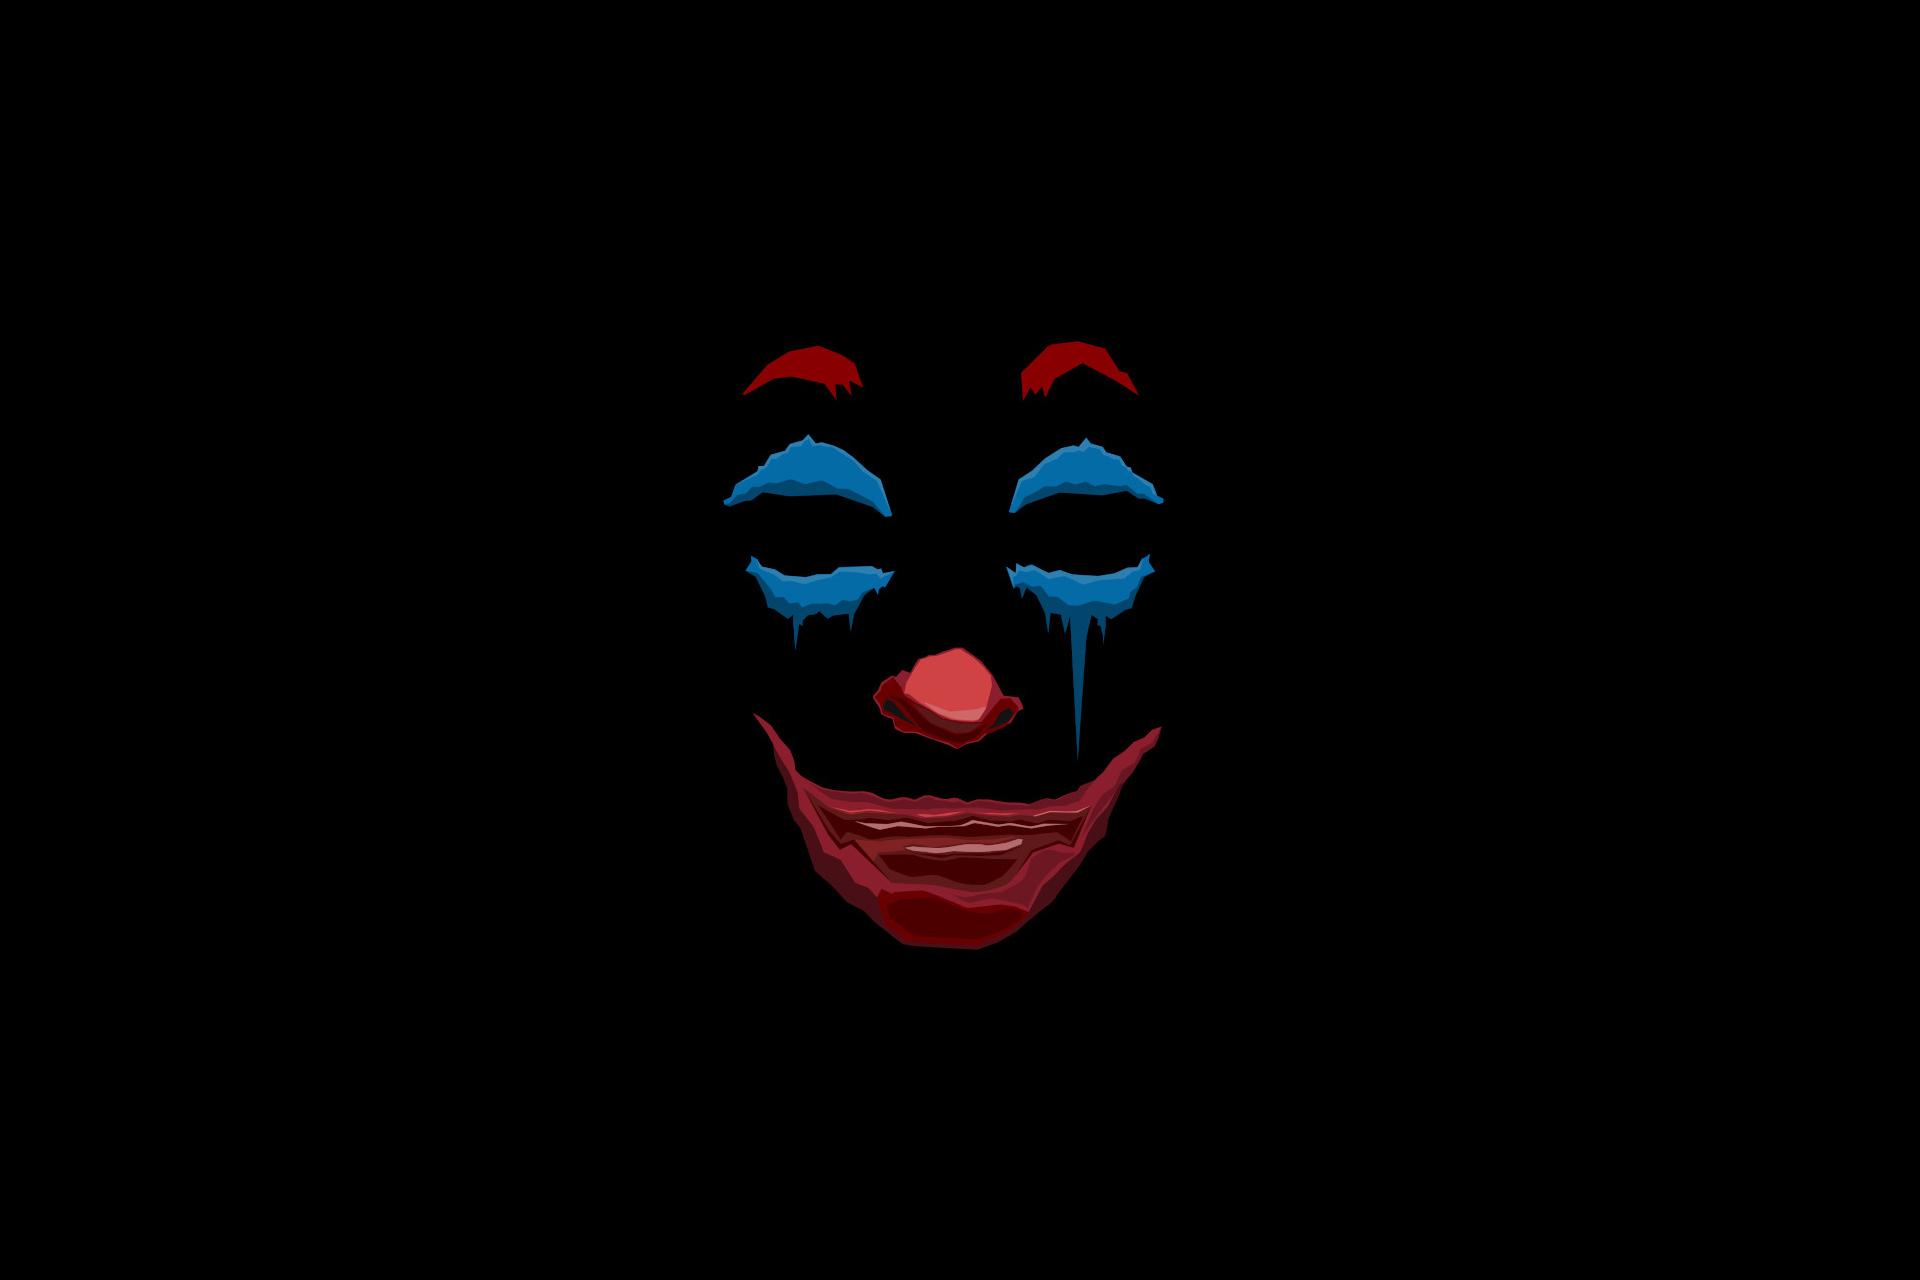 Joker Movie Minimalist Wallpaper, HD Minimalist 4K Wallpaper, Image, Photo and Background